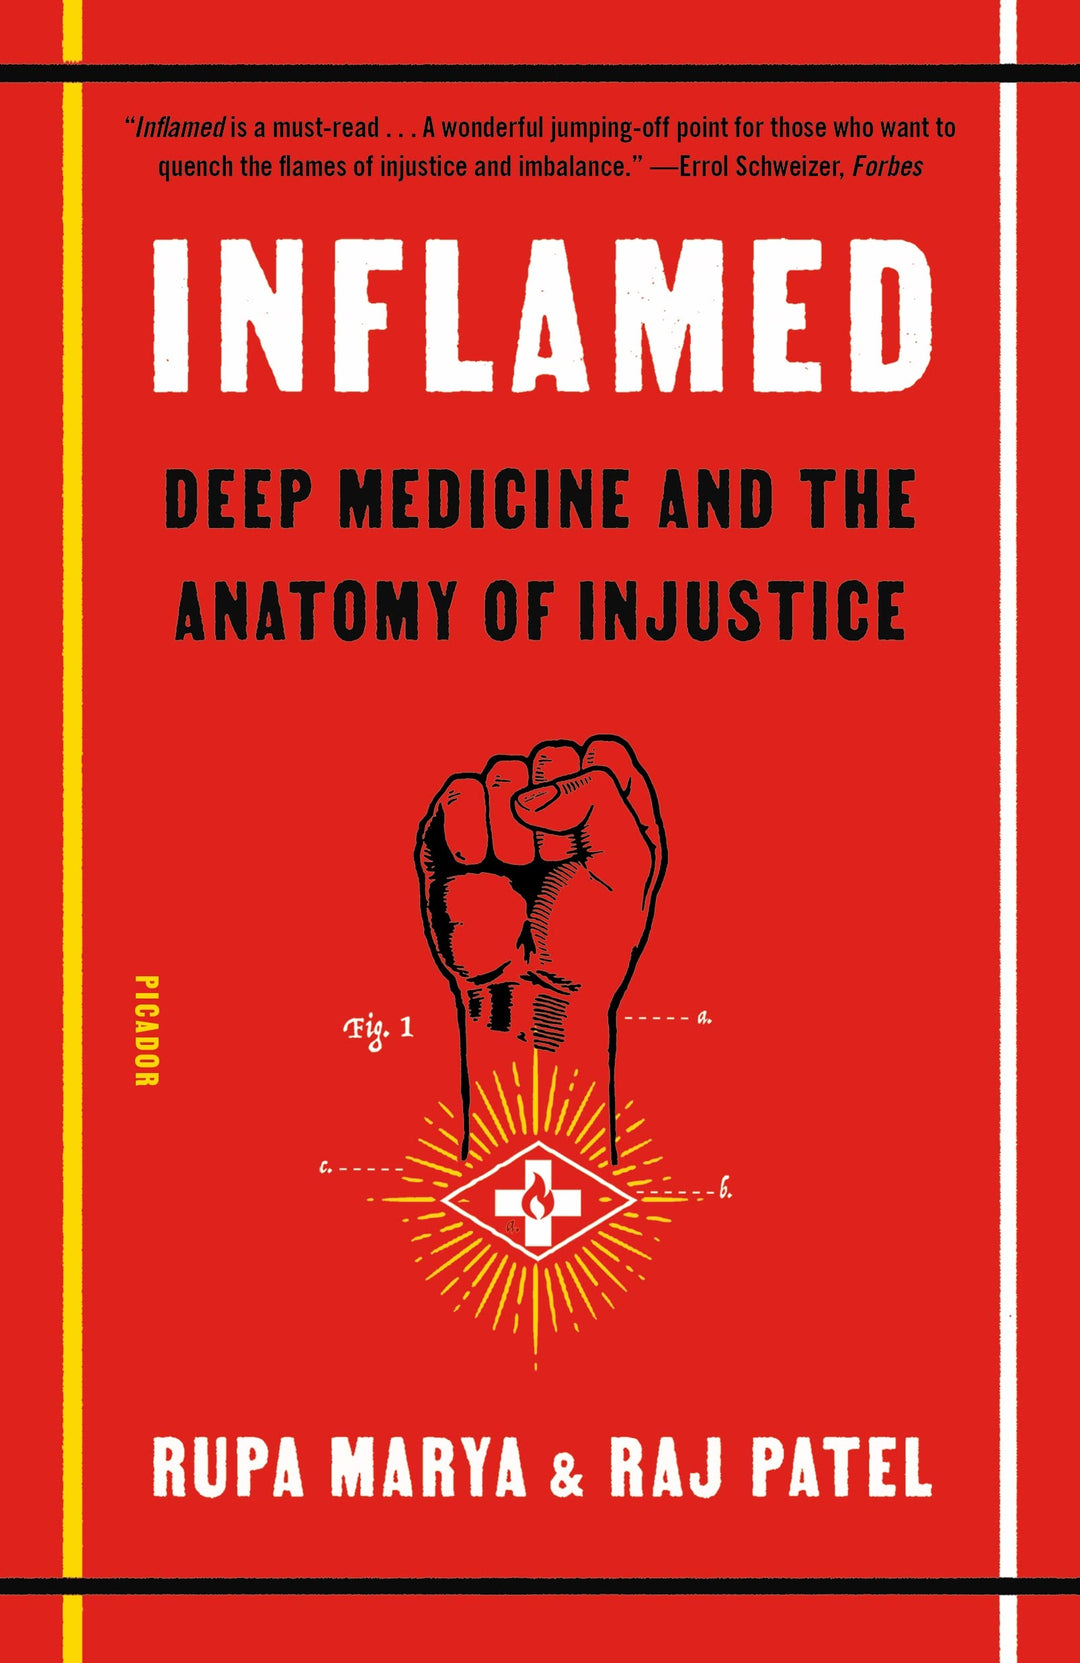 Inflamed: Deep Medicine and the Anatomy of Injustice by Rupa Marya & Raj Patel